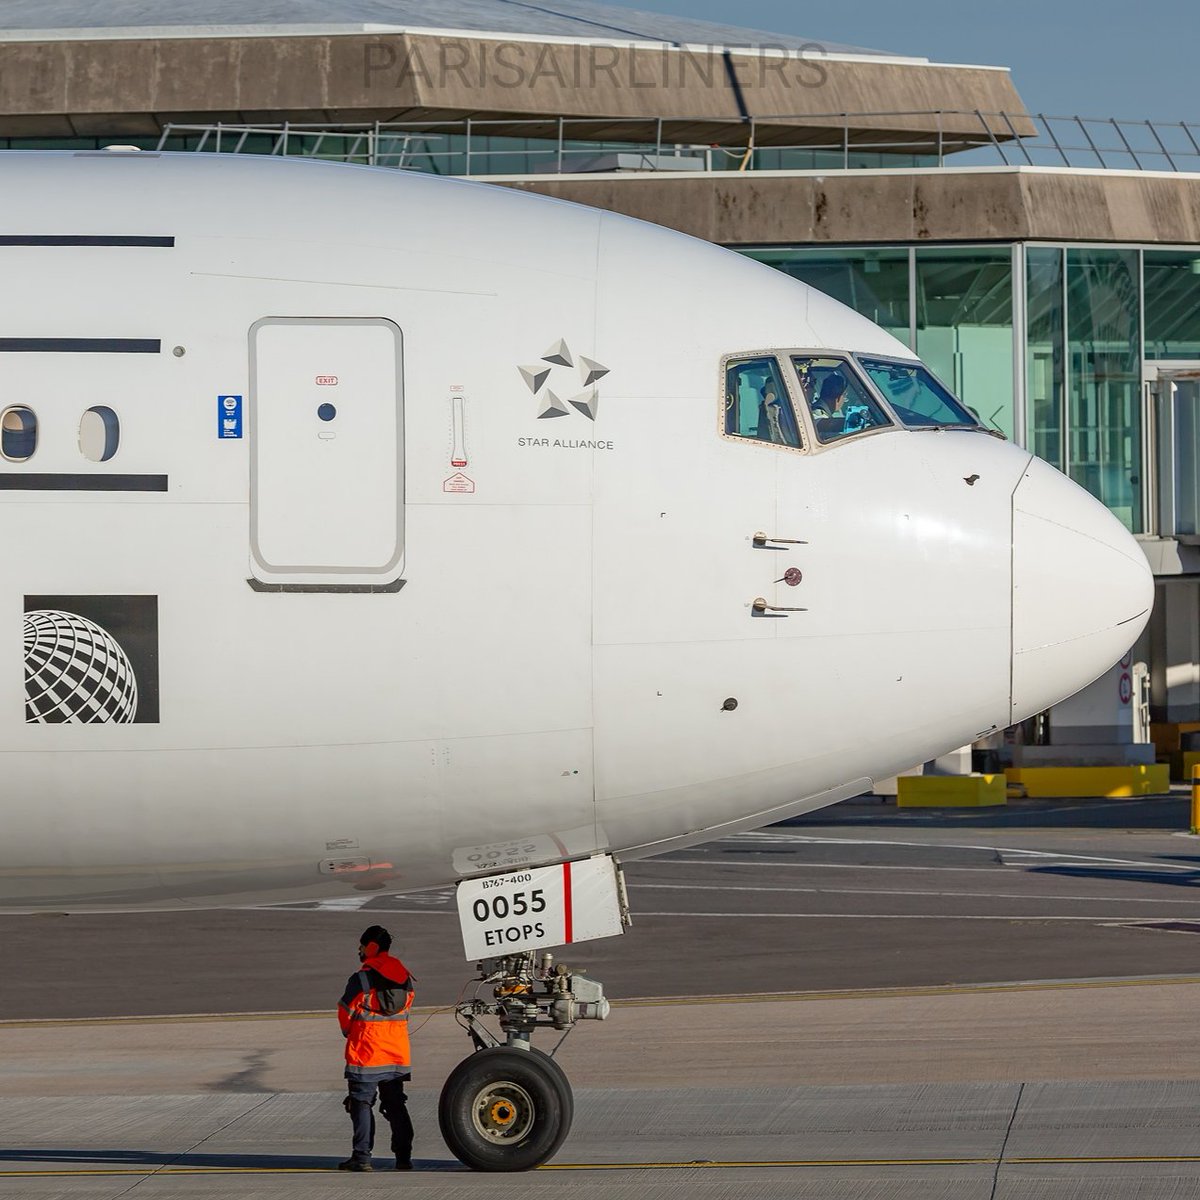 🤩🤩🤩🇺🇲🇺🇲
➖➖➖➖➖➖➖➖➖➖
Aircraft✈️: Boeing 767-400ER
Airline 🇺🇲 : United Airlines 
➖➖➖➖➖➖➖➖➖➖

#usa #speedbird #b767 #boeing #france #aviationgoals #aviationeverywhere #boeing767